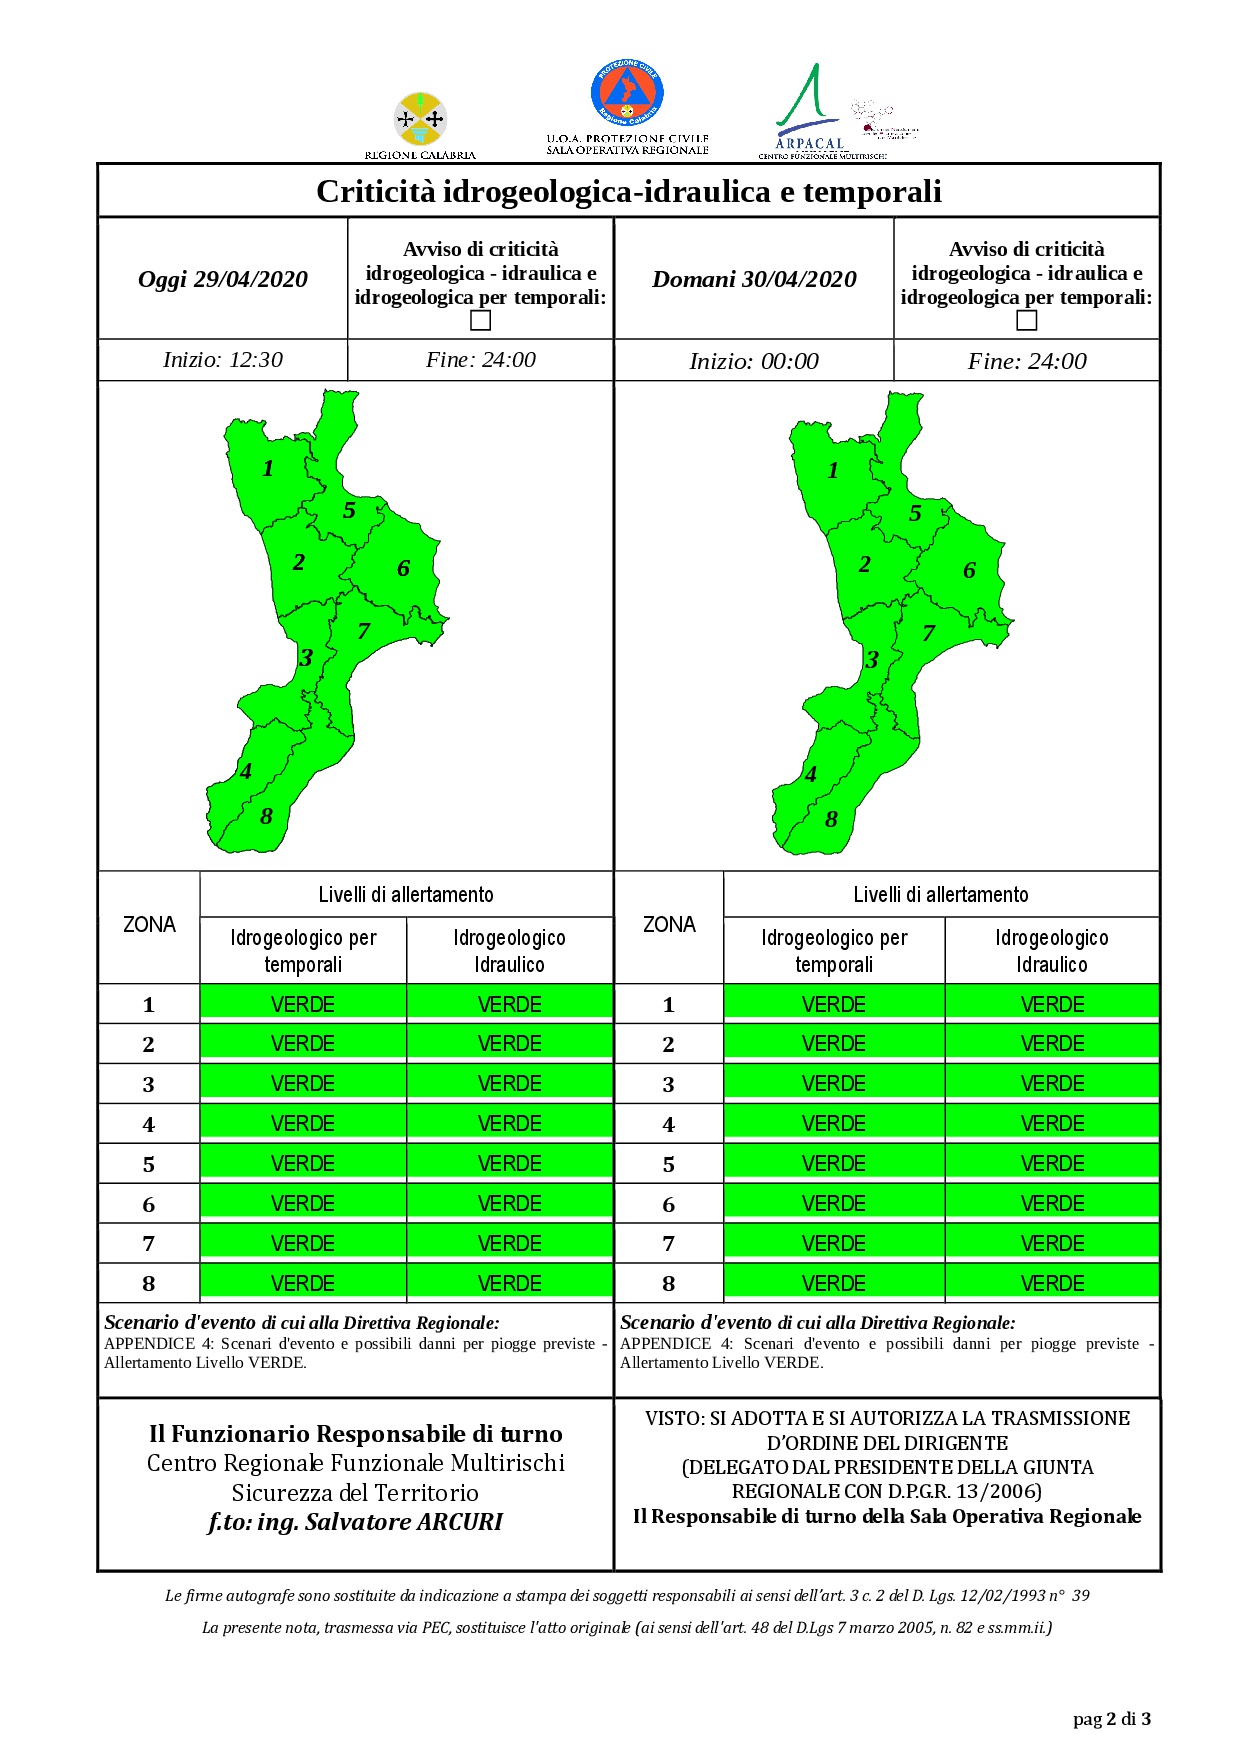 Criticità idrogeologica-idraulica e temporali in Calabria 29-04-2020